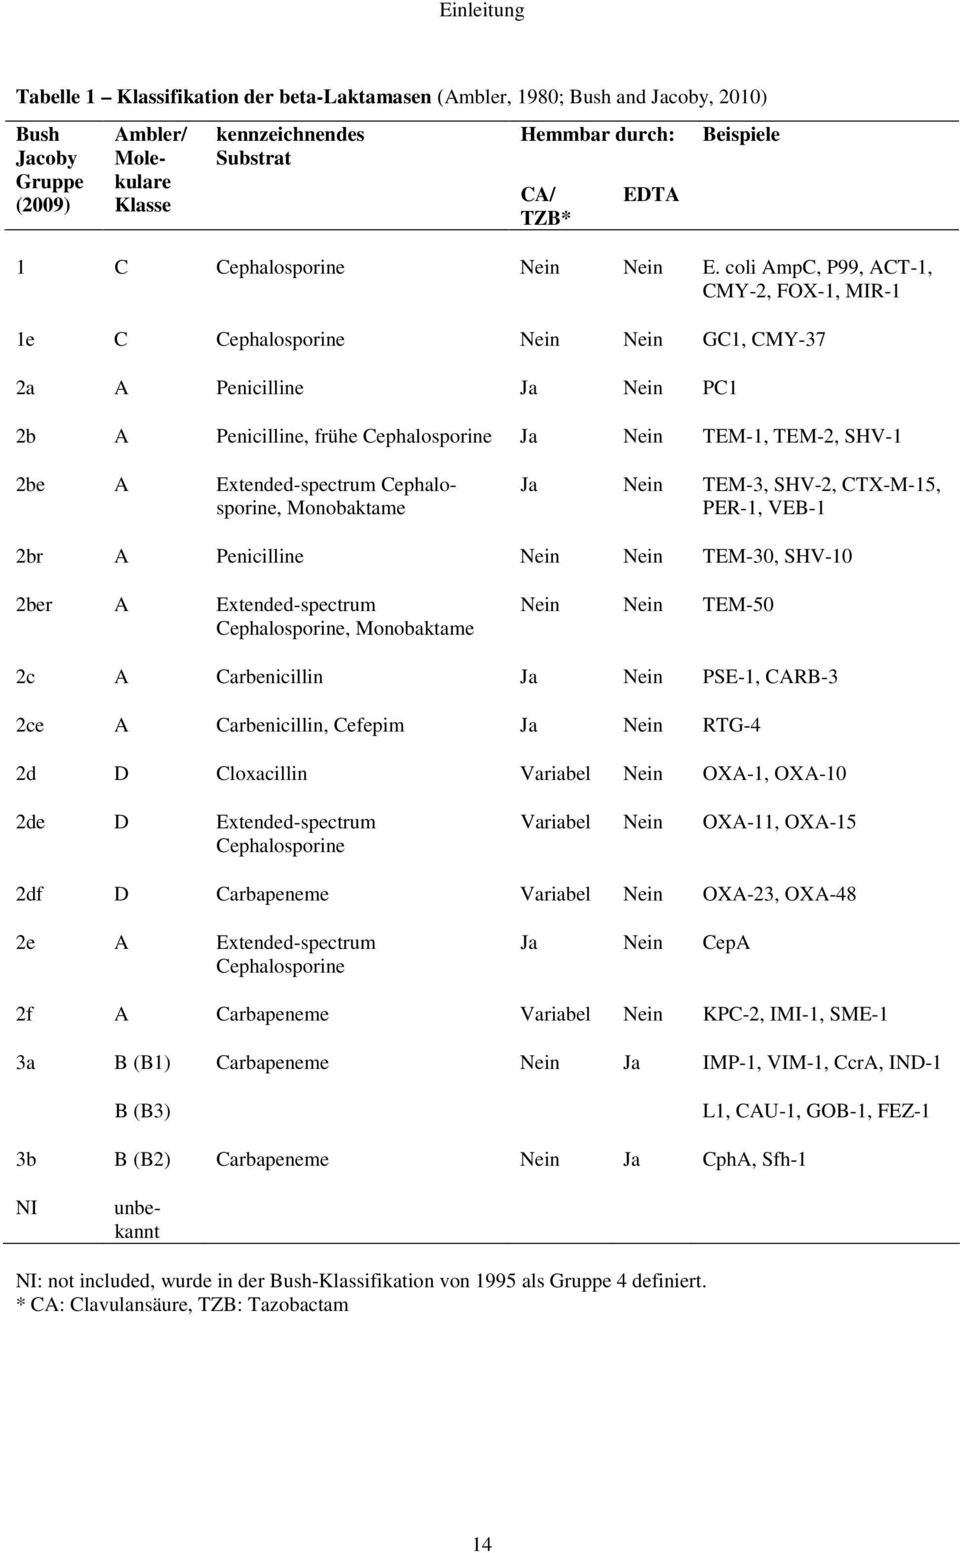 coli AmpC, P99, ACT-1, CMY-2, FOX-1, MIR-1 1e C Cephalosporine Nein Nein GC1, CMY-37 2a A Penicilline Ja Nein PC1 2b A Penicilline, frühe Cephalosporine Ja Nein TEM-1, TEM-2, SHV-1 2be A